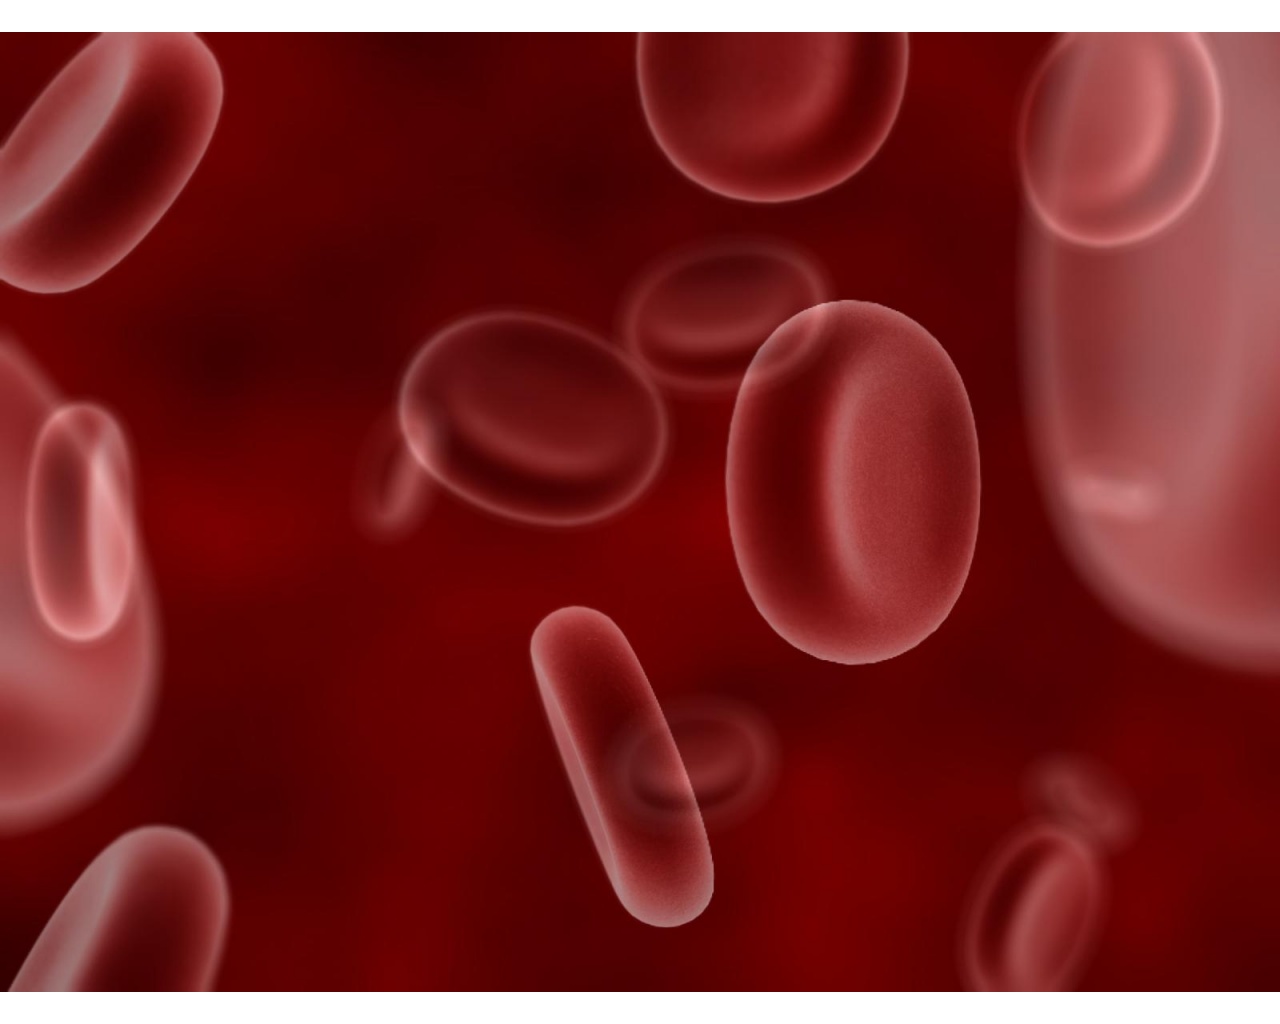 Blood Biology - Red Blood Cells - HD Wallpaper 